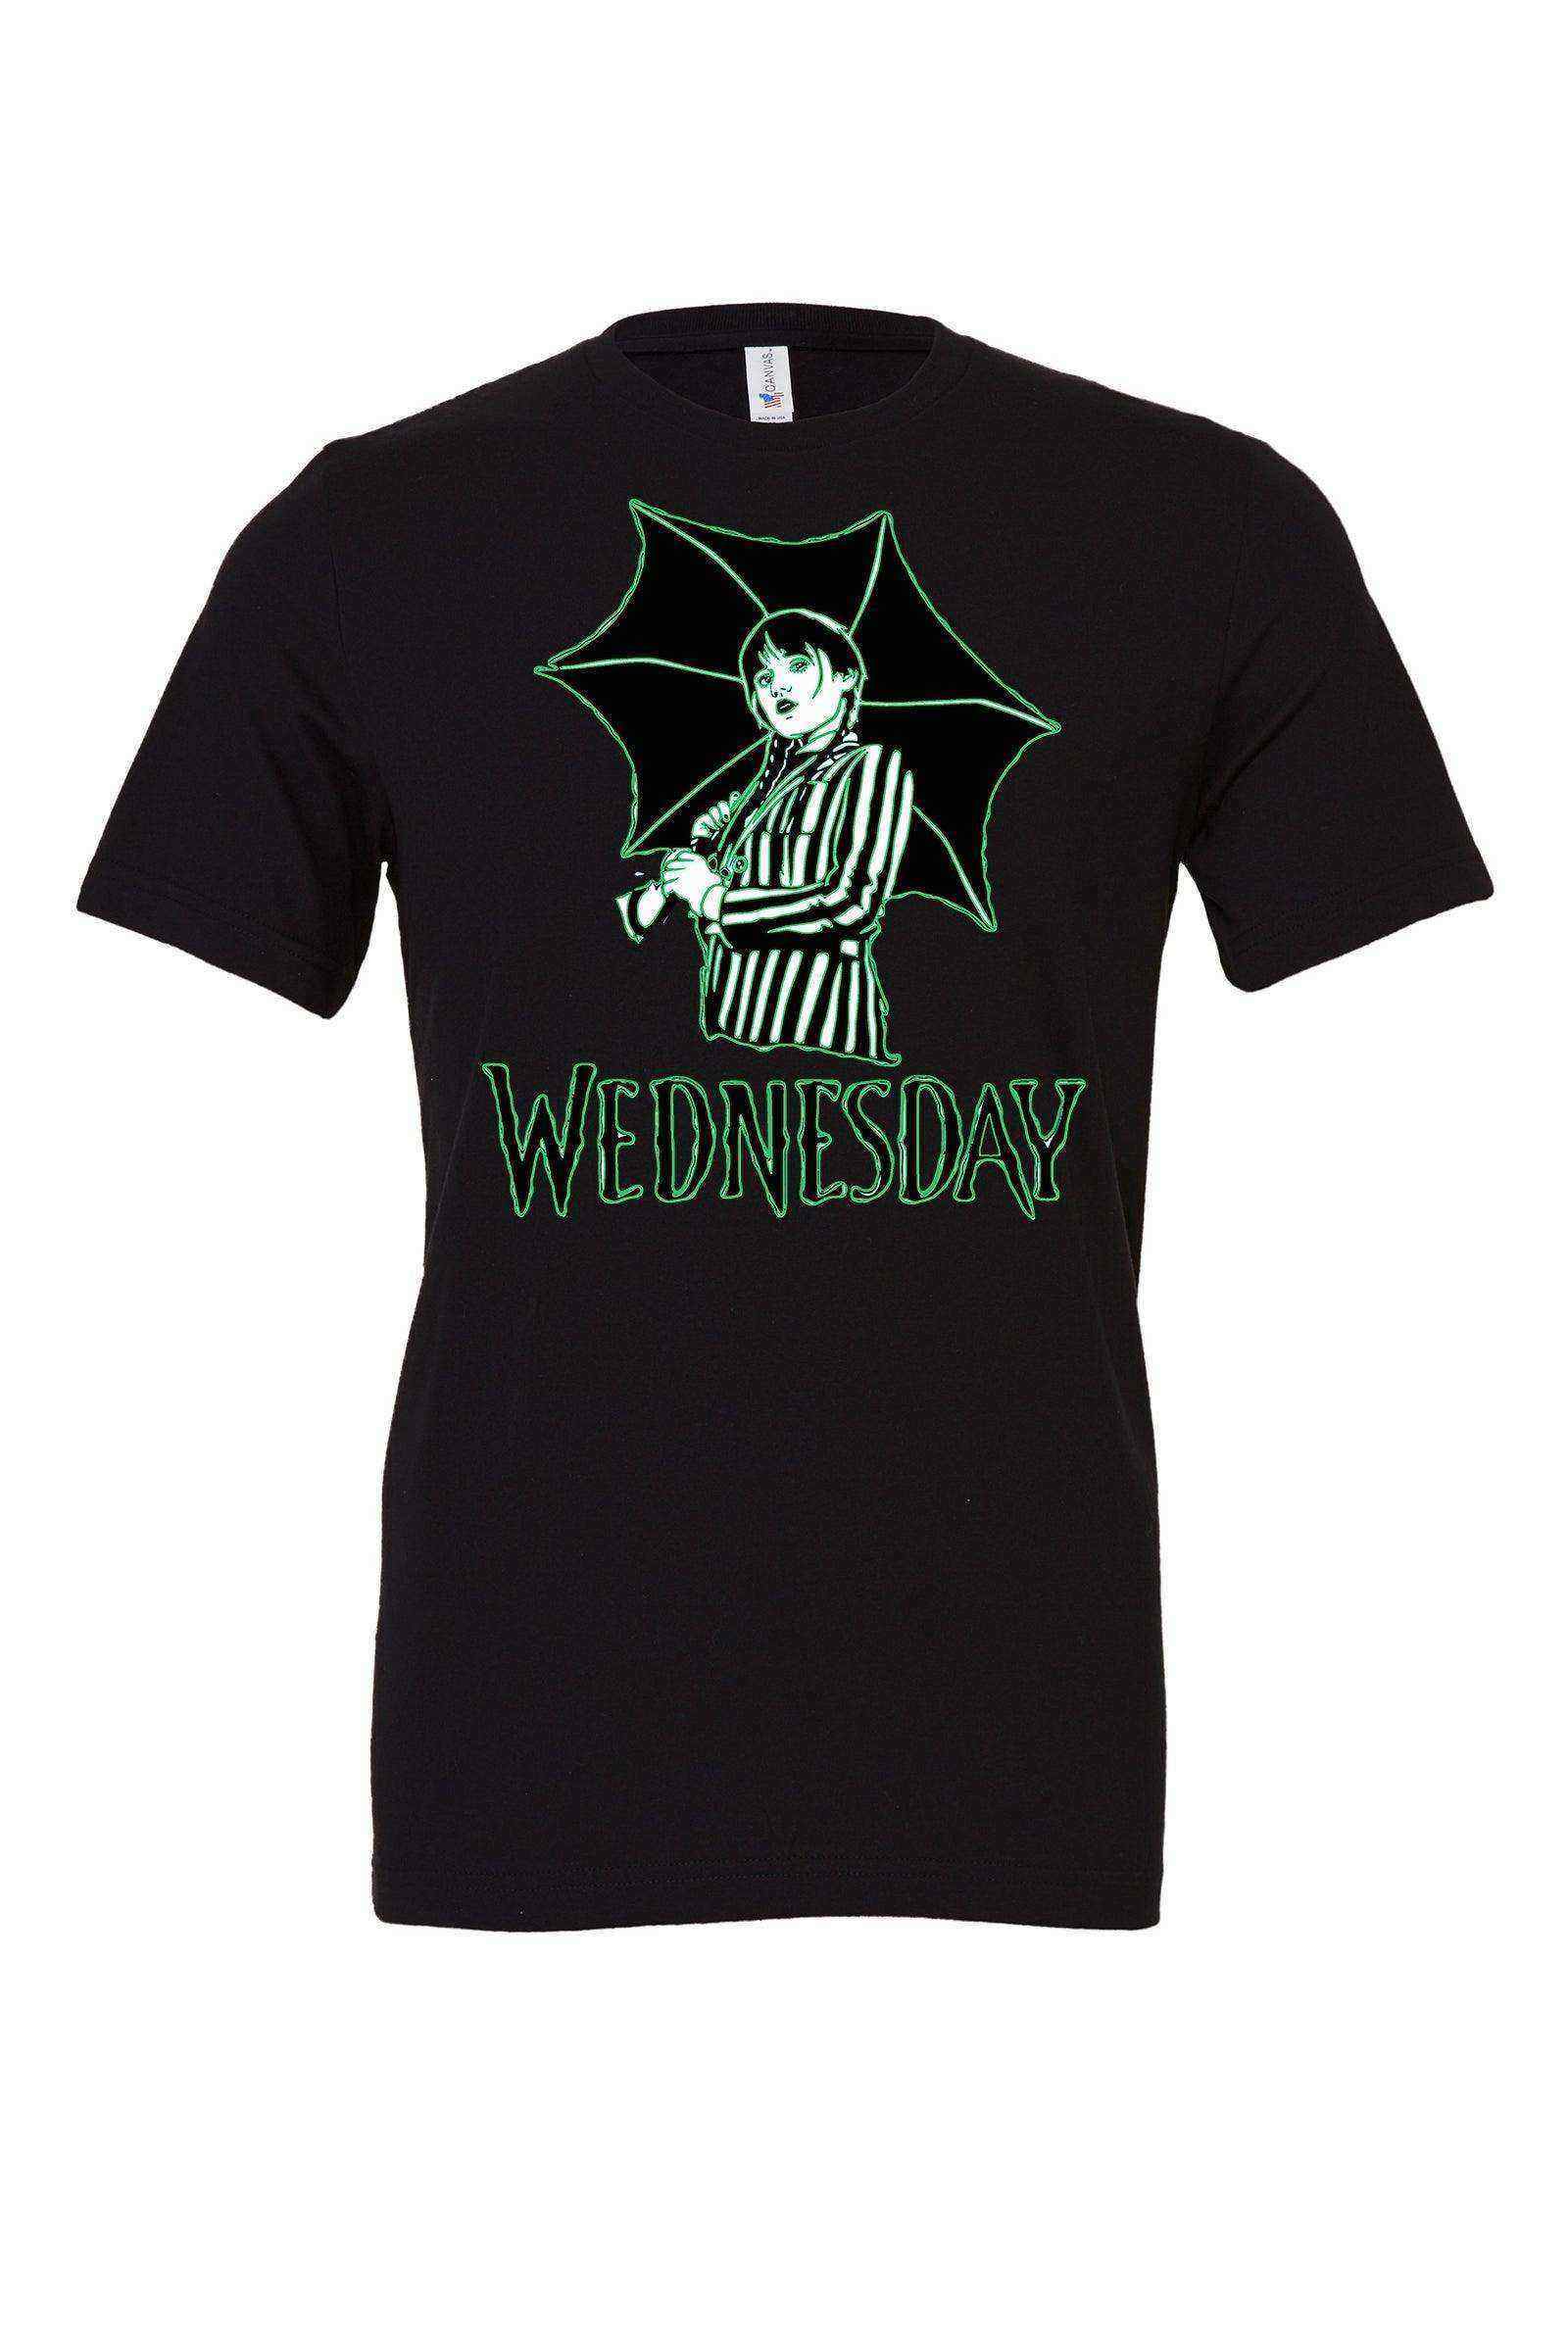 Womens | Umbrella Wednesday Shirt | Wednesday Shirt - Dylan's Tees